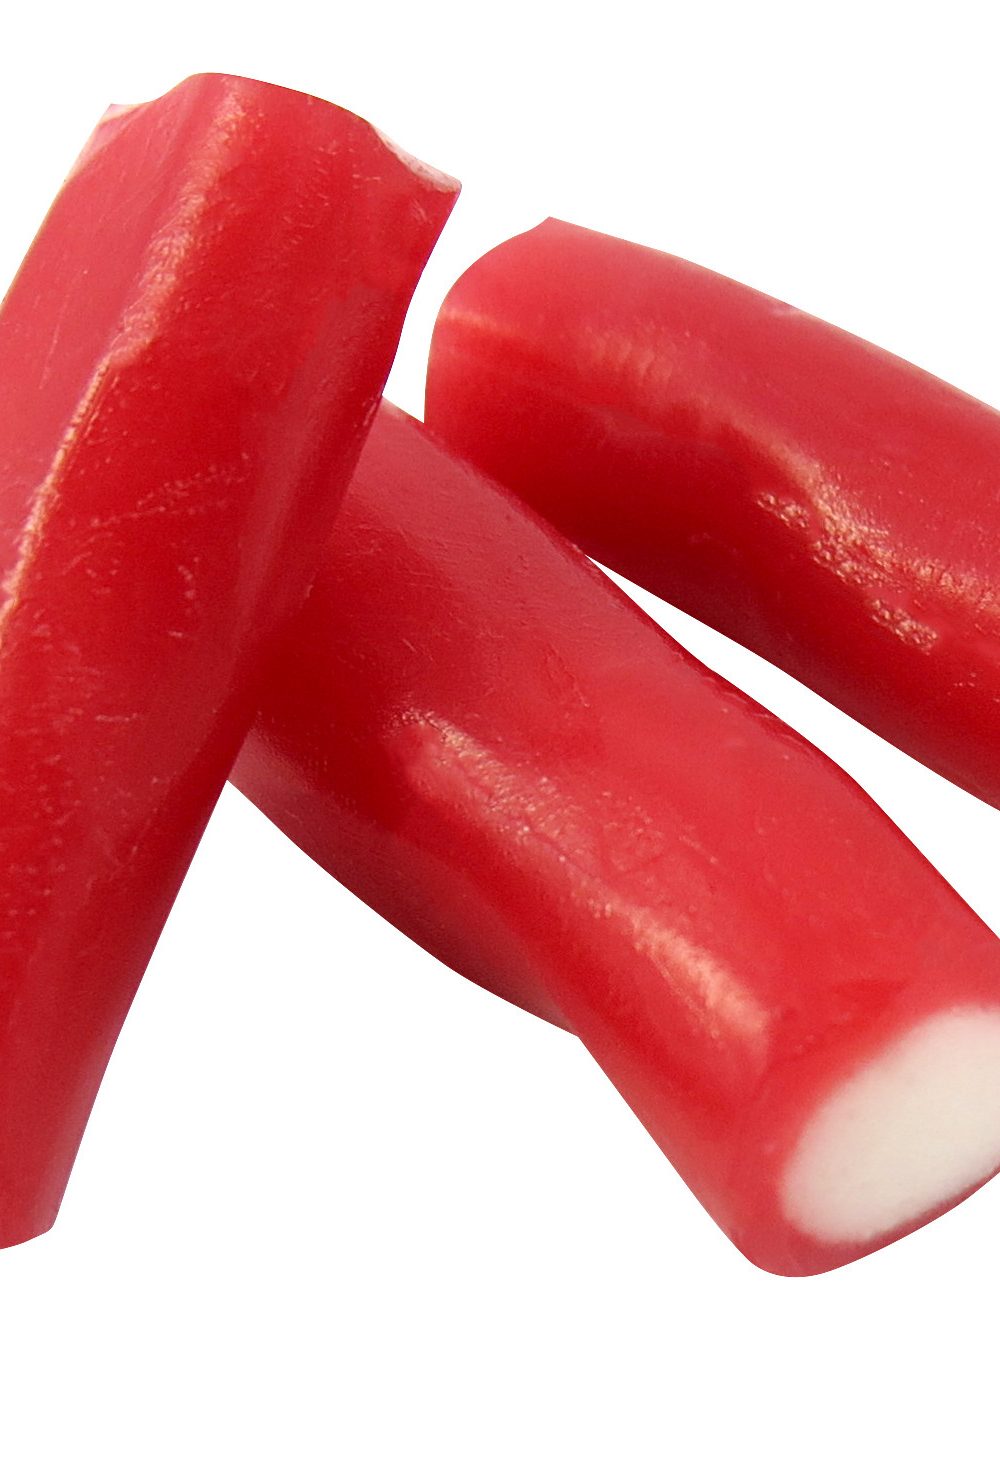 Strawberry Pencil Bites